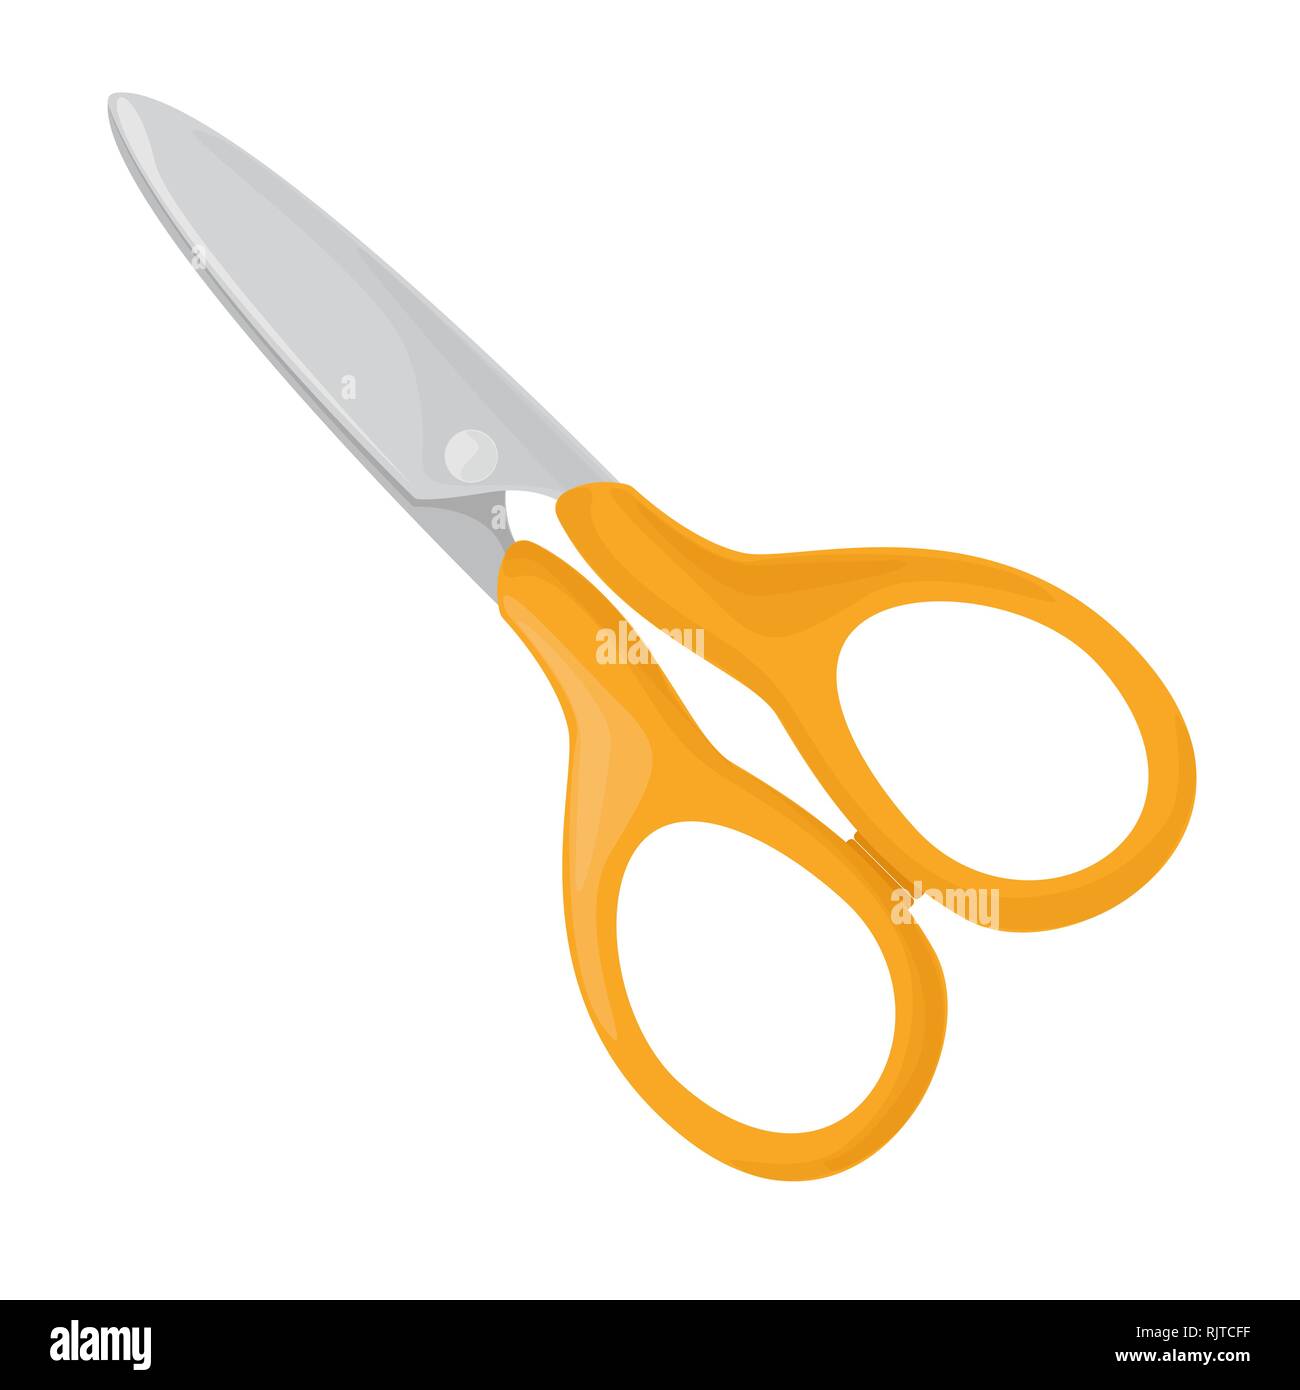 https://c8.alamy.com/comp/RJTCFF/scissors-with-orange-handle-in-cartoon-style-vector-illustration-RJTCFF.jpg